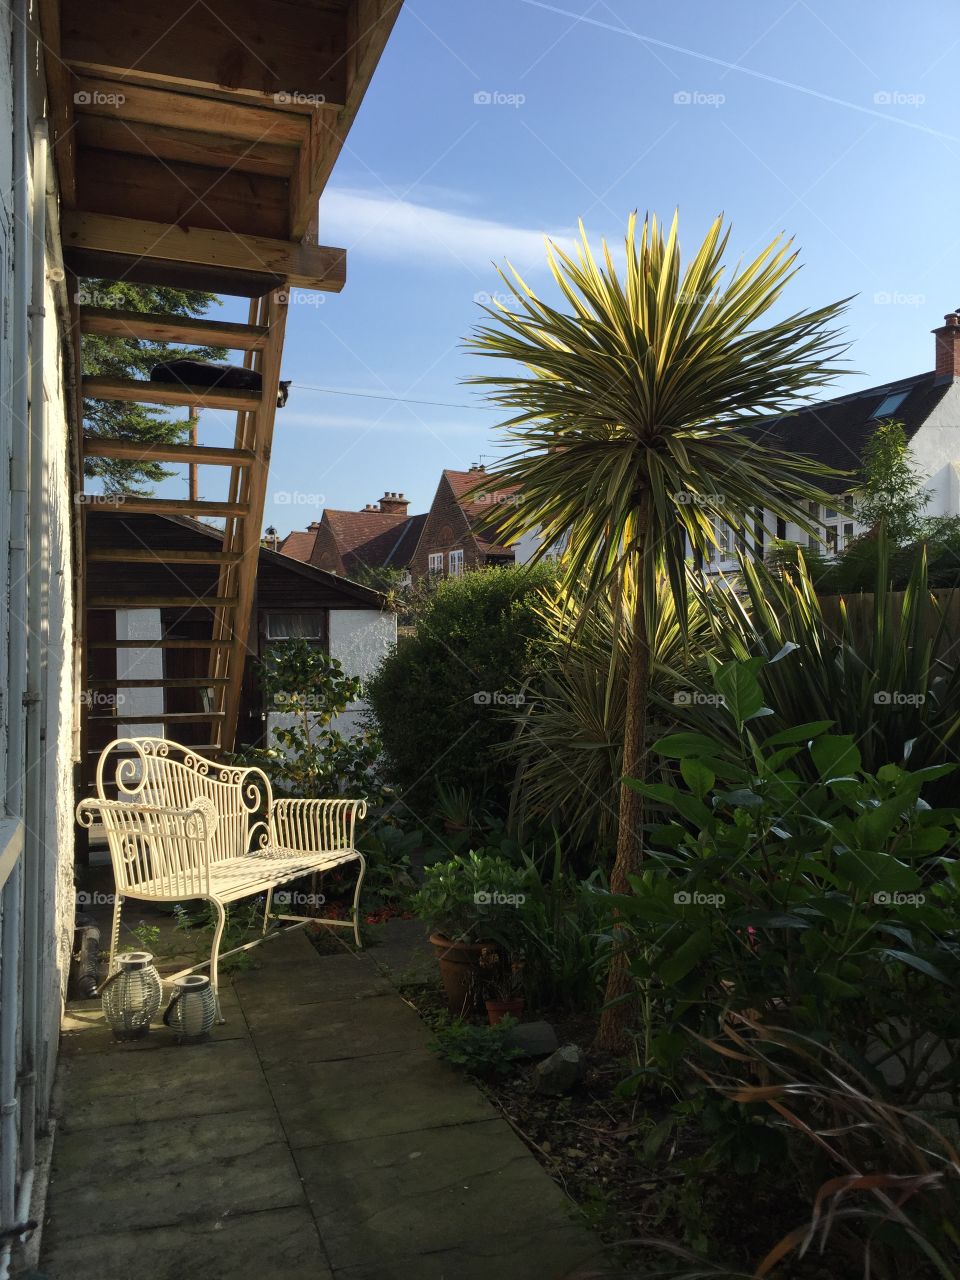 English garden. Harmony. Cat. Palm tree. Garden bench. 